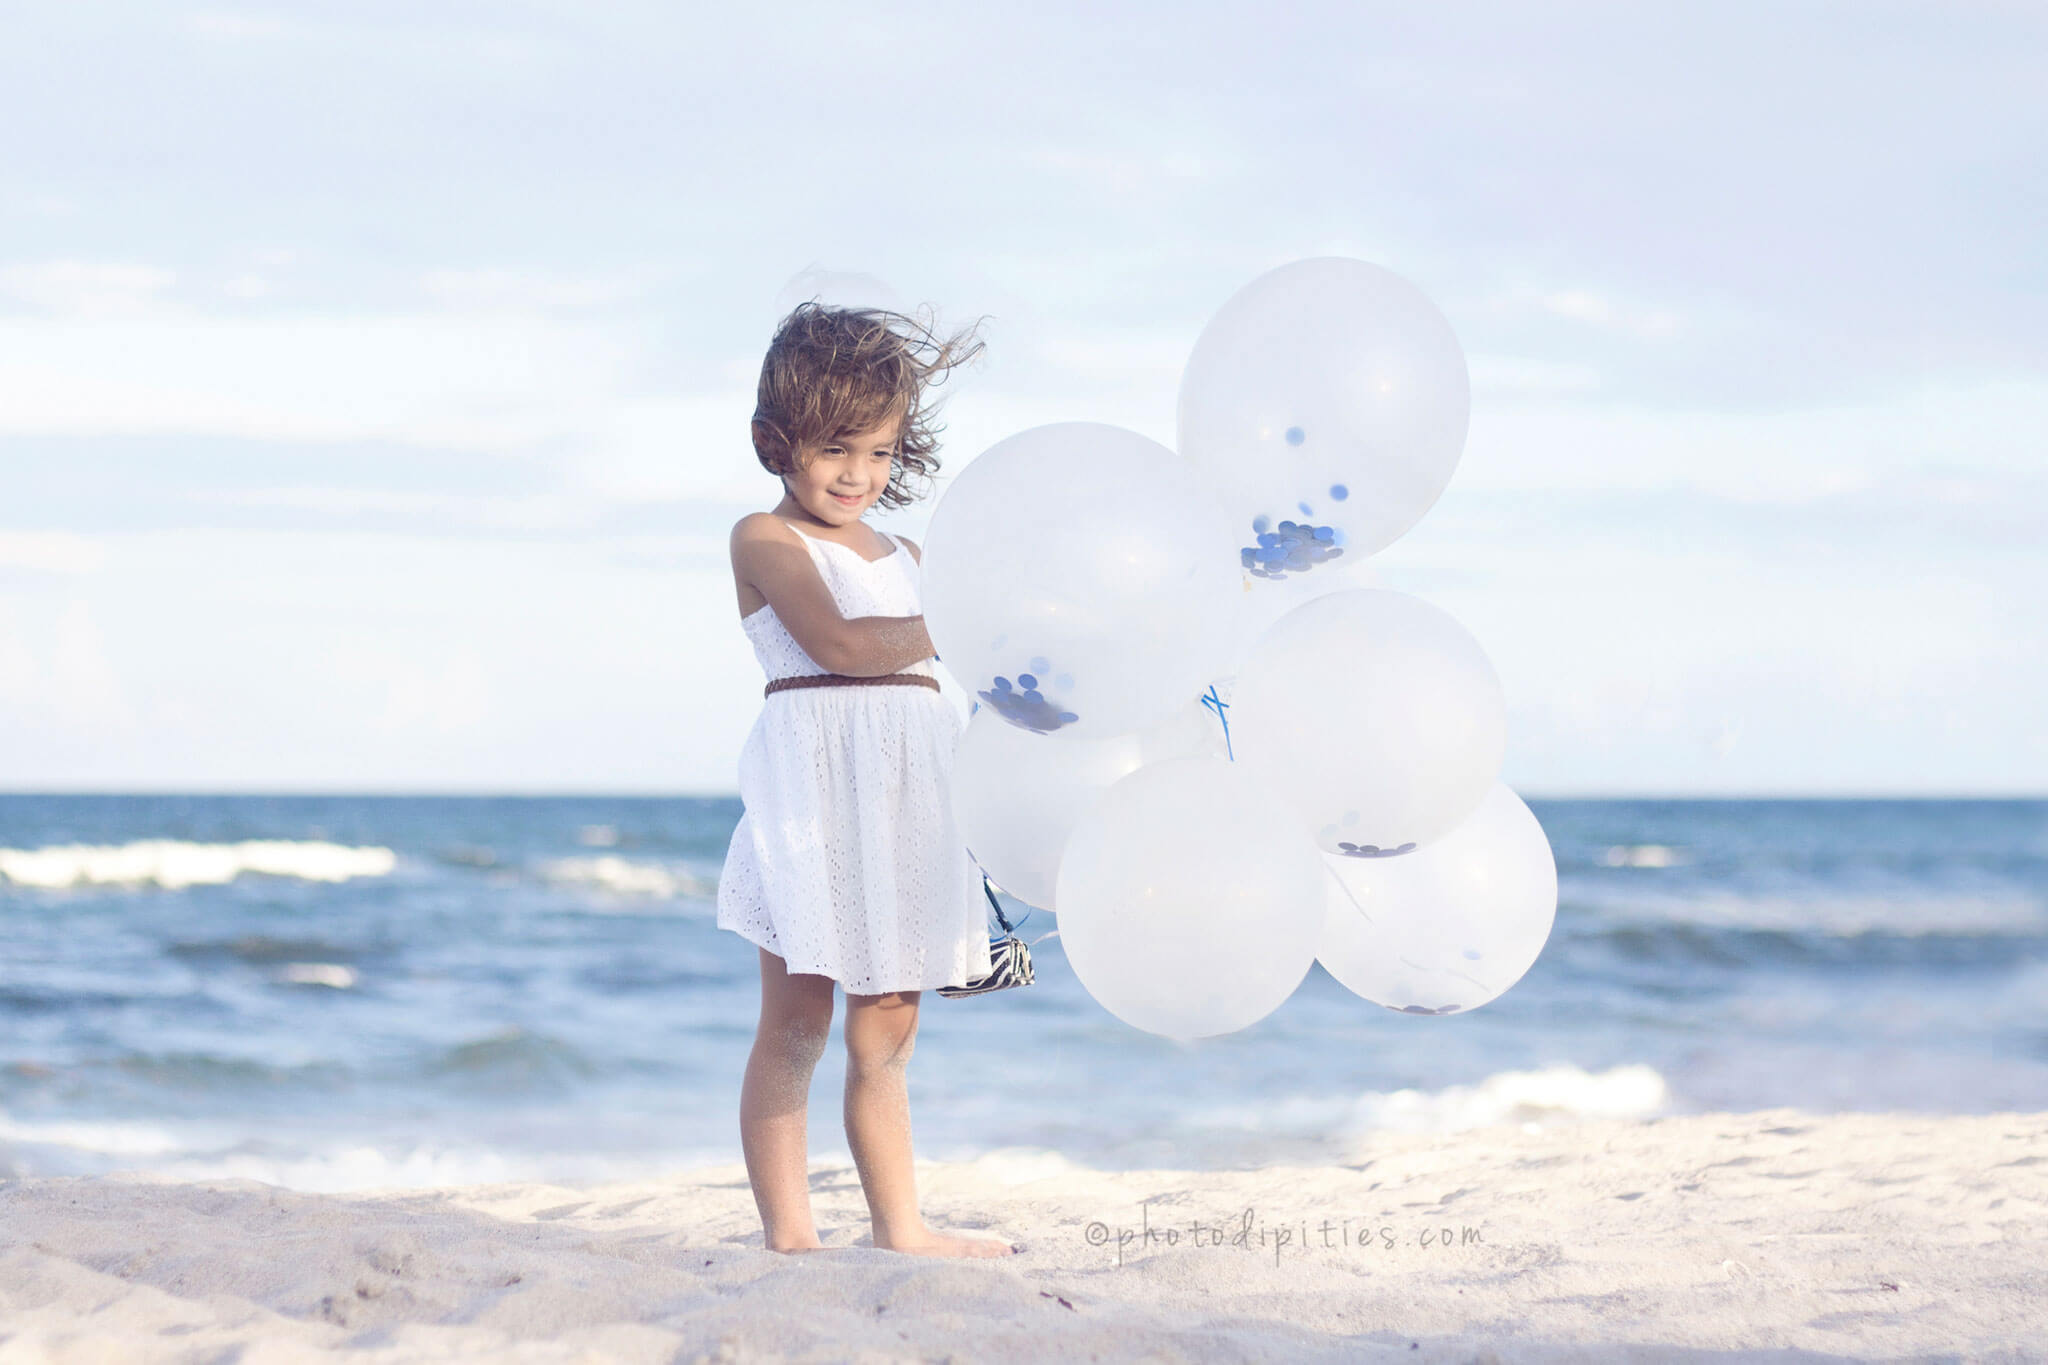 Photodipities Family | Children Beach Photography